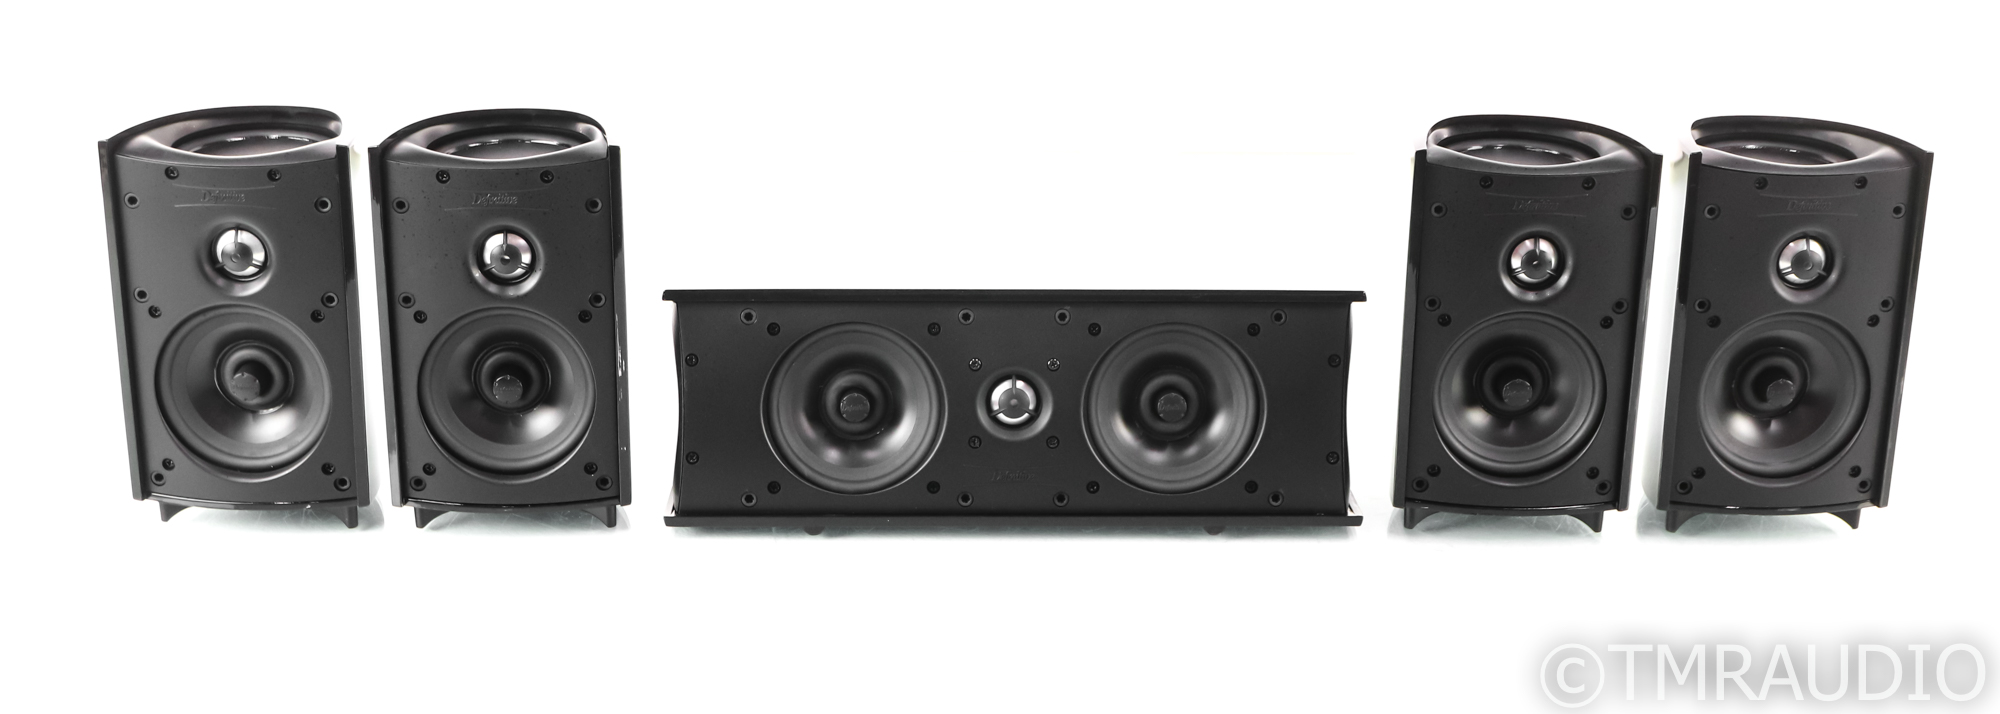 DEFINITIVE TECHNOLOGY NEW PROCINEMA 800 5.1 Home Theater Speaker System